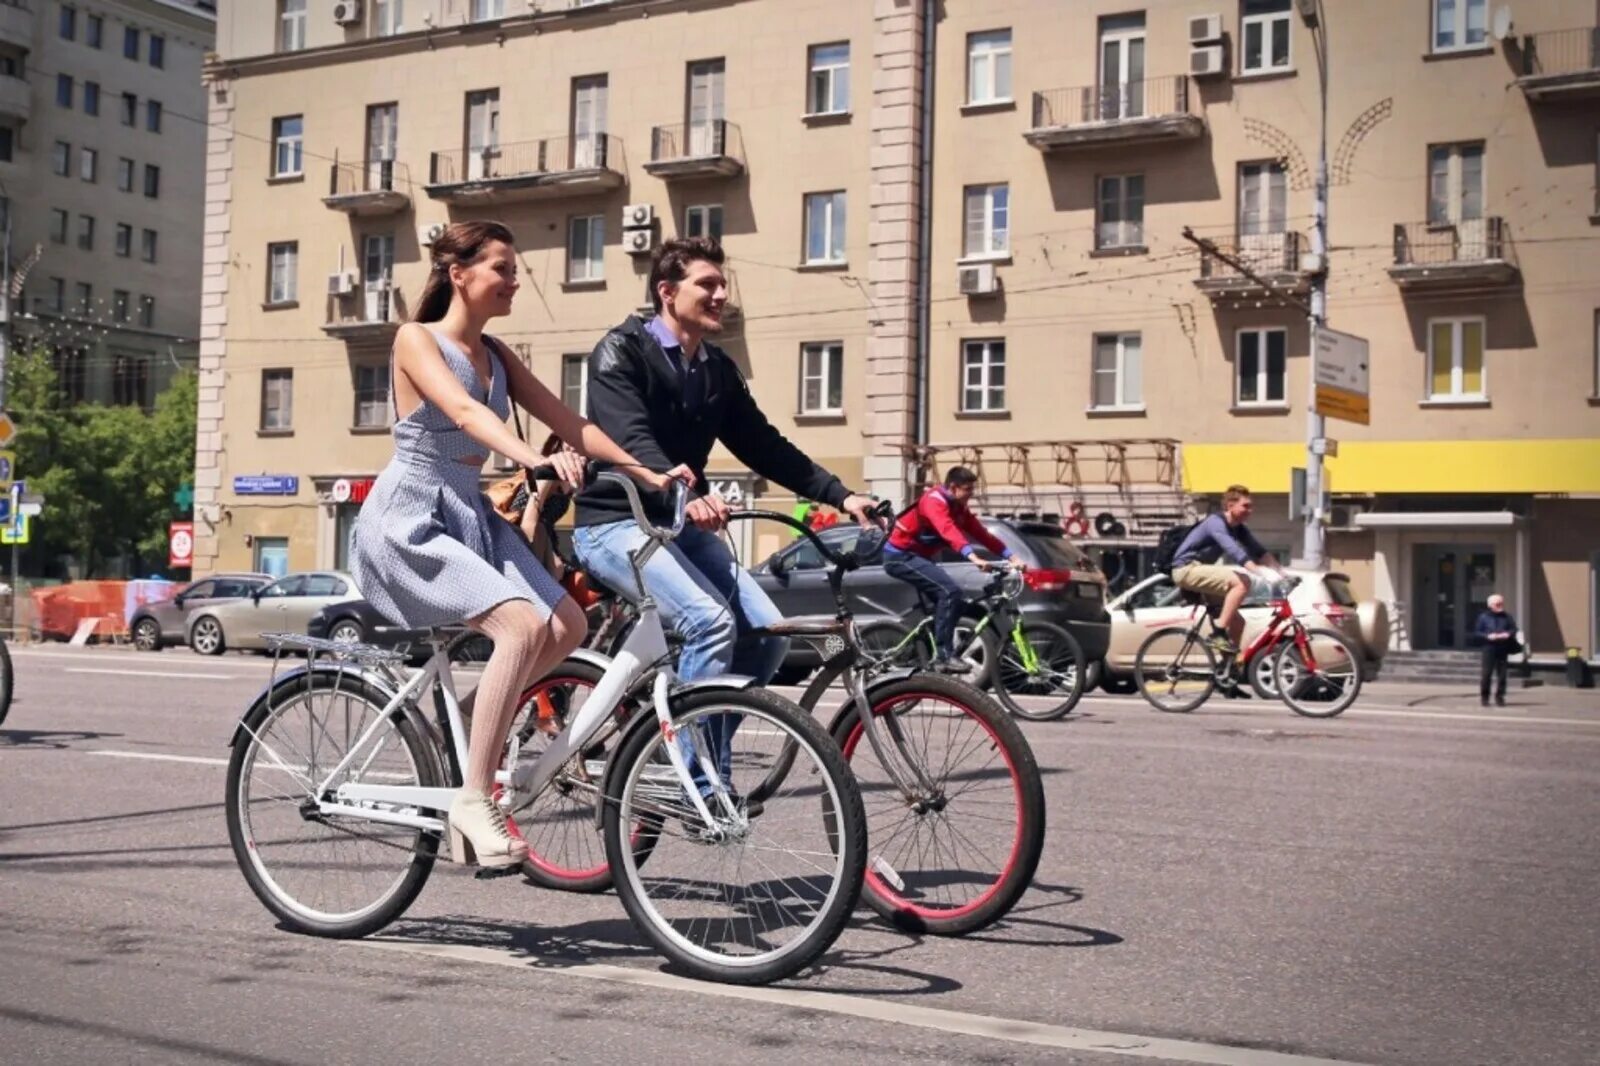 Bike москва. Велосипедист в городе. Велосипед в городе. Городской велосипед. Городской велосипедист.